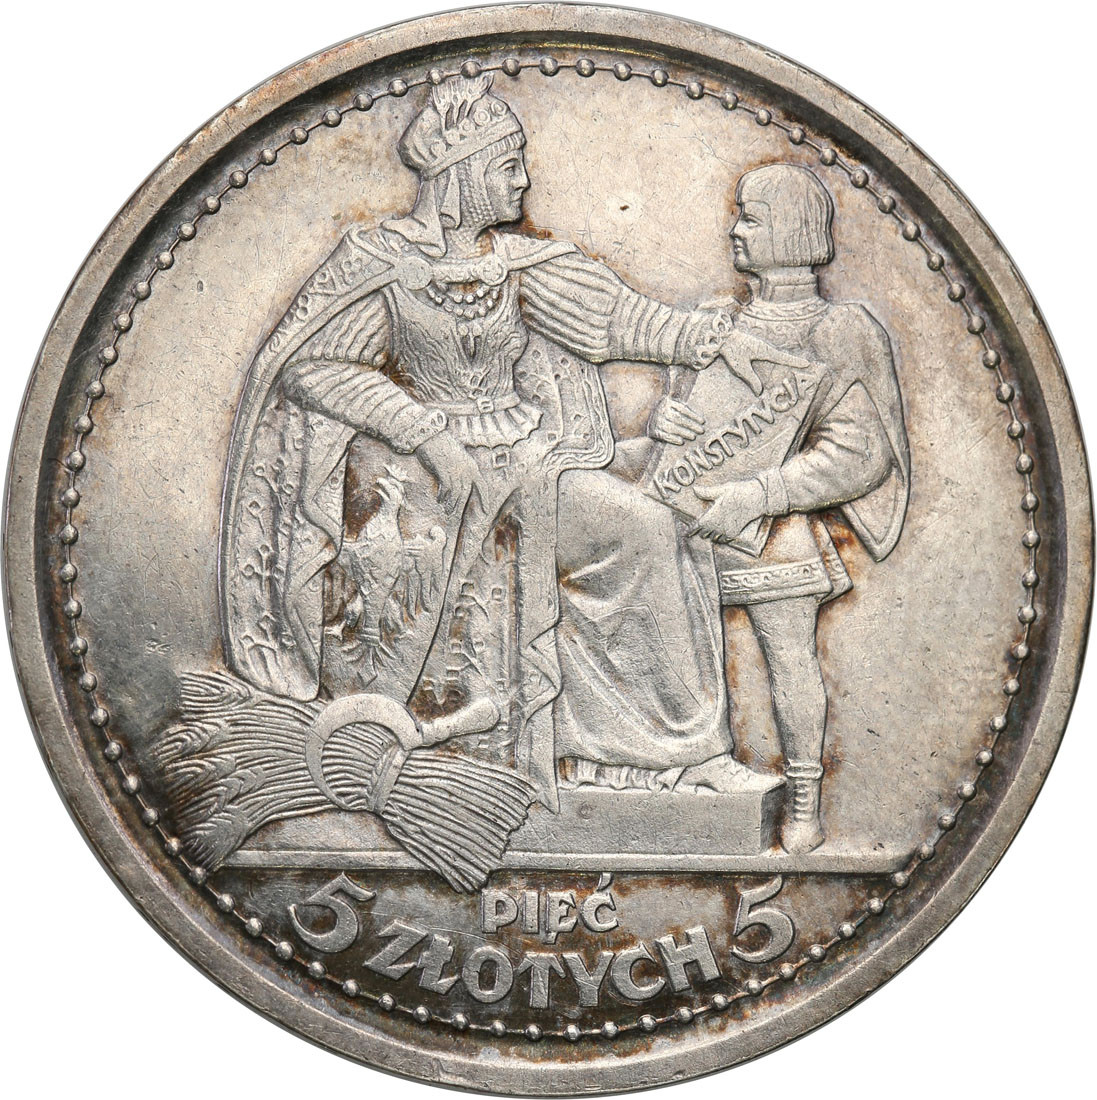 PRÓBA srebro 5 złotych 1925 Konstytucja 81 perełek